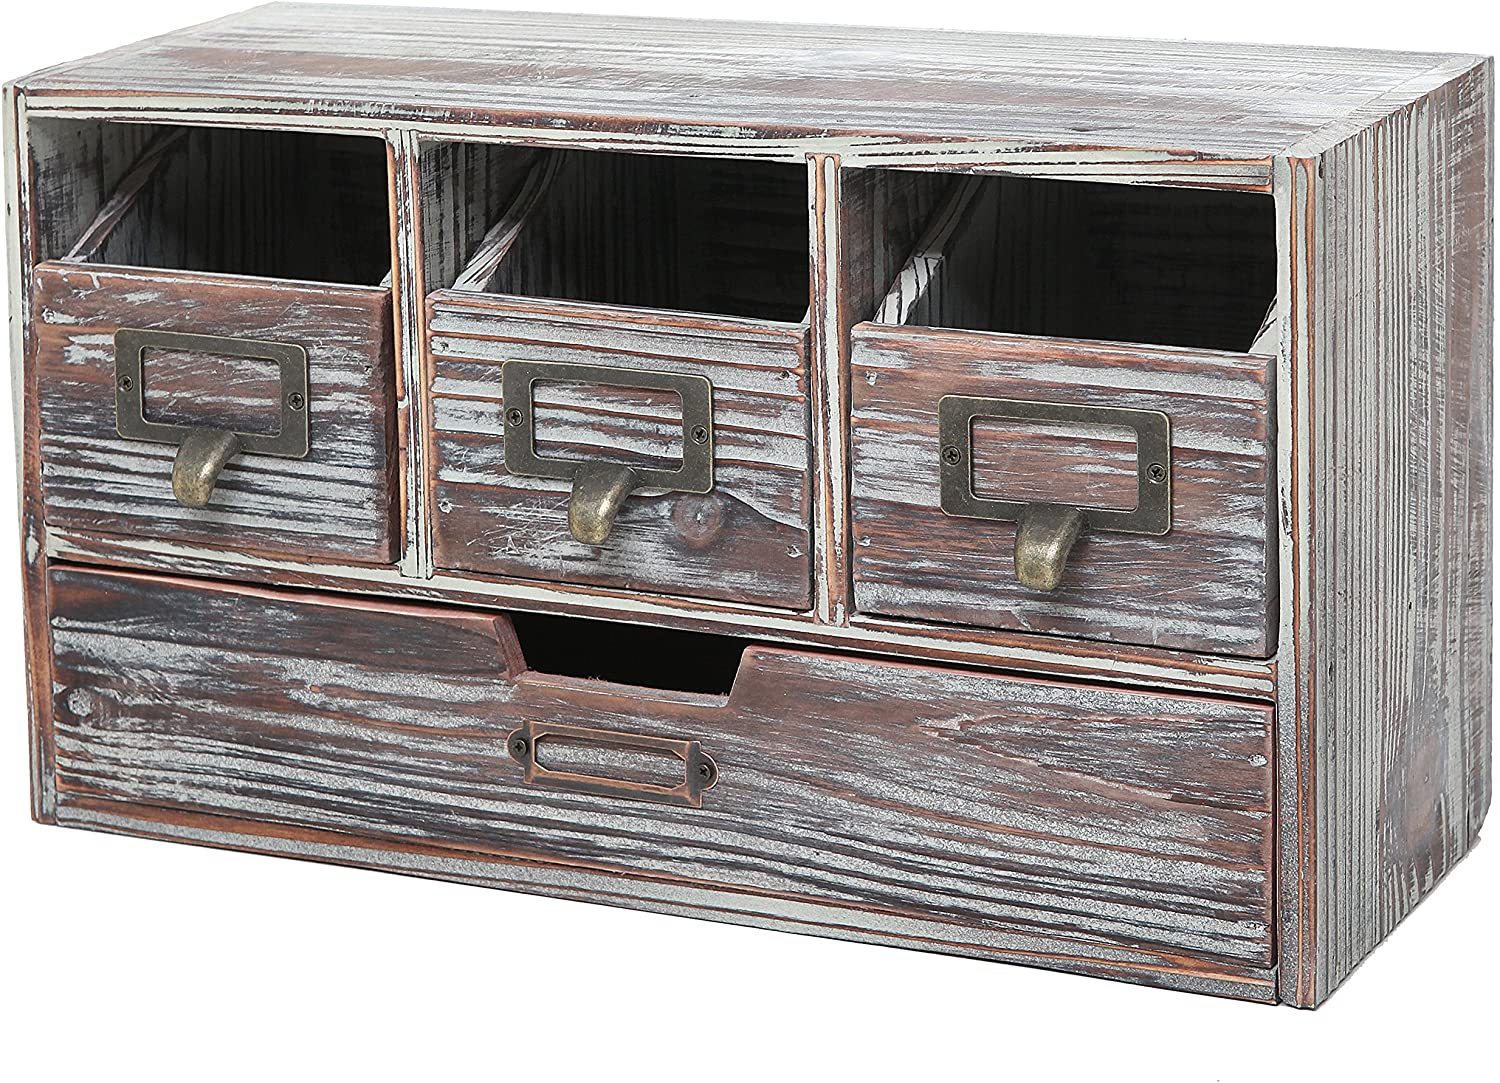 Rustic Brown Torched Wood Finish Desktop Office Organizer Drawers/Craft Supplies Storage Cabinet